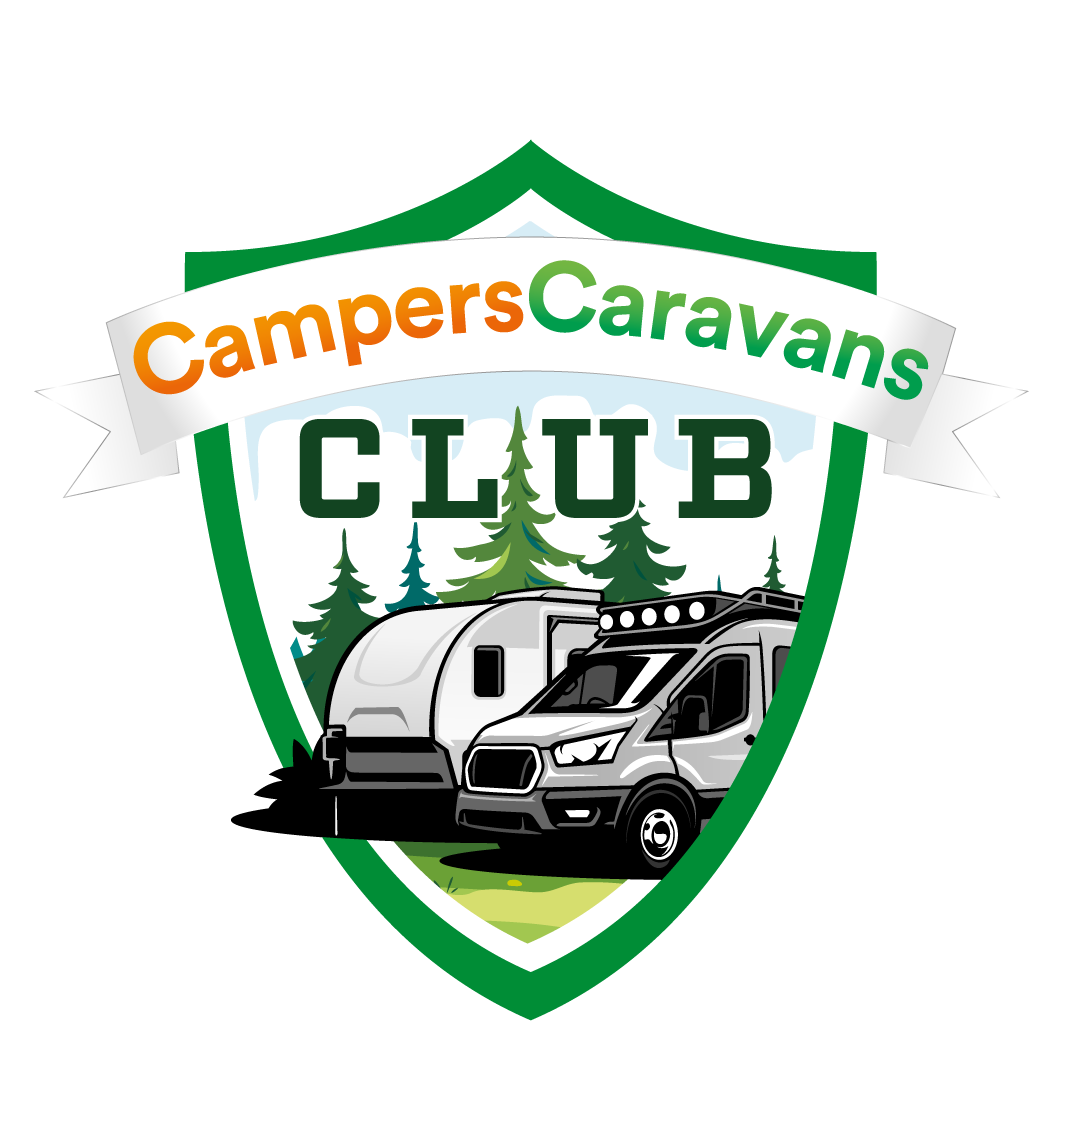 Campers caravans logo